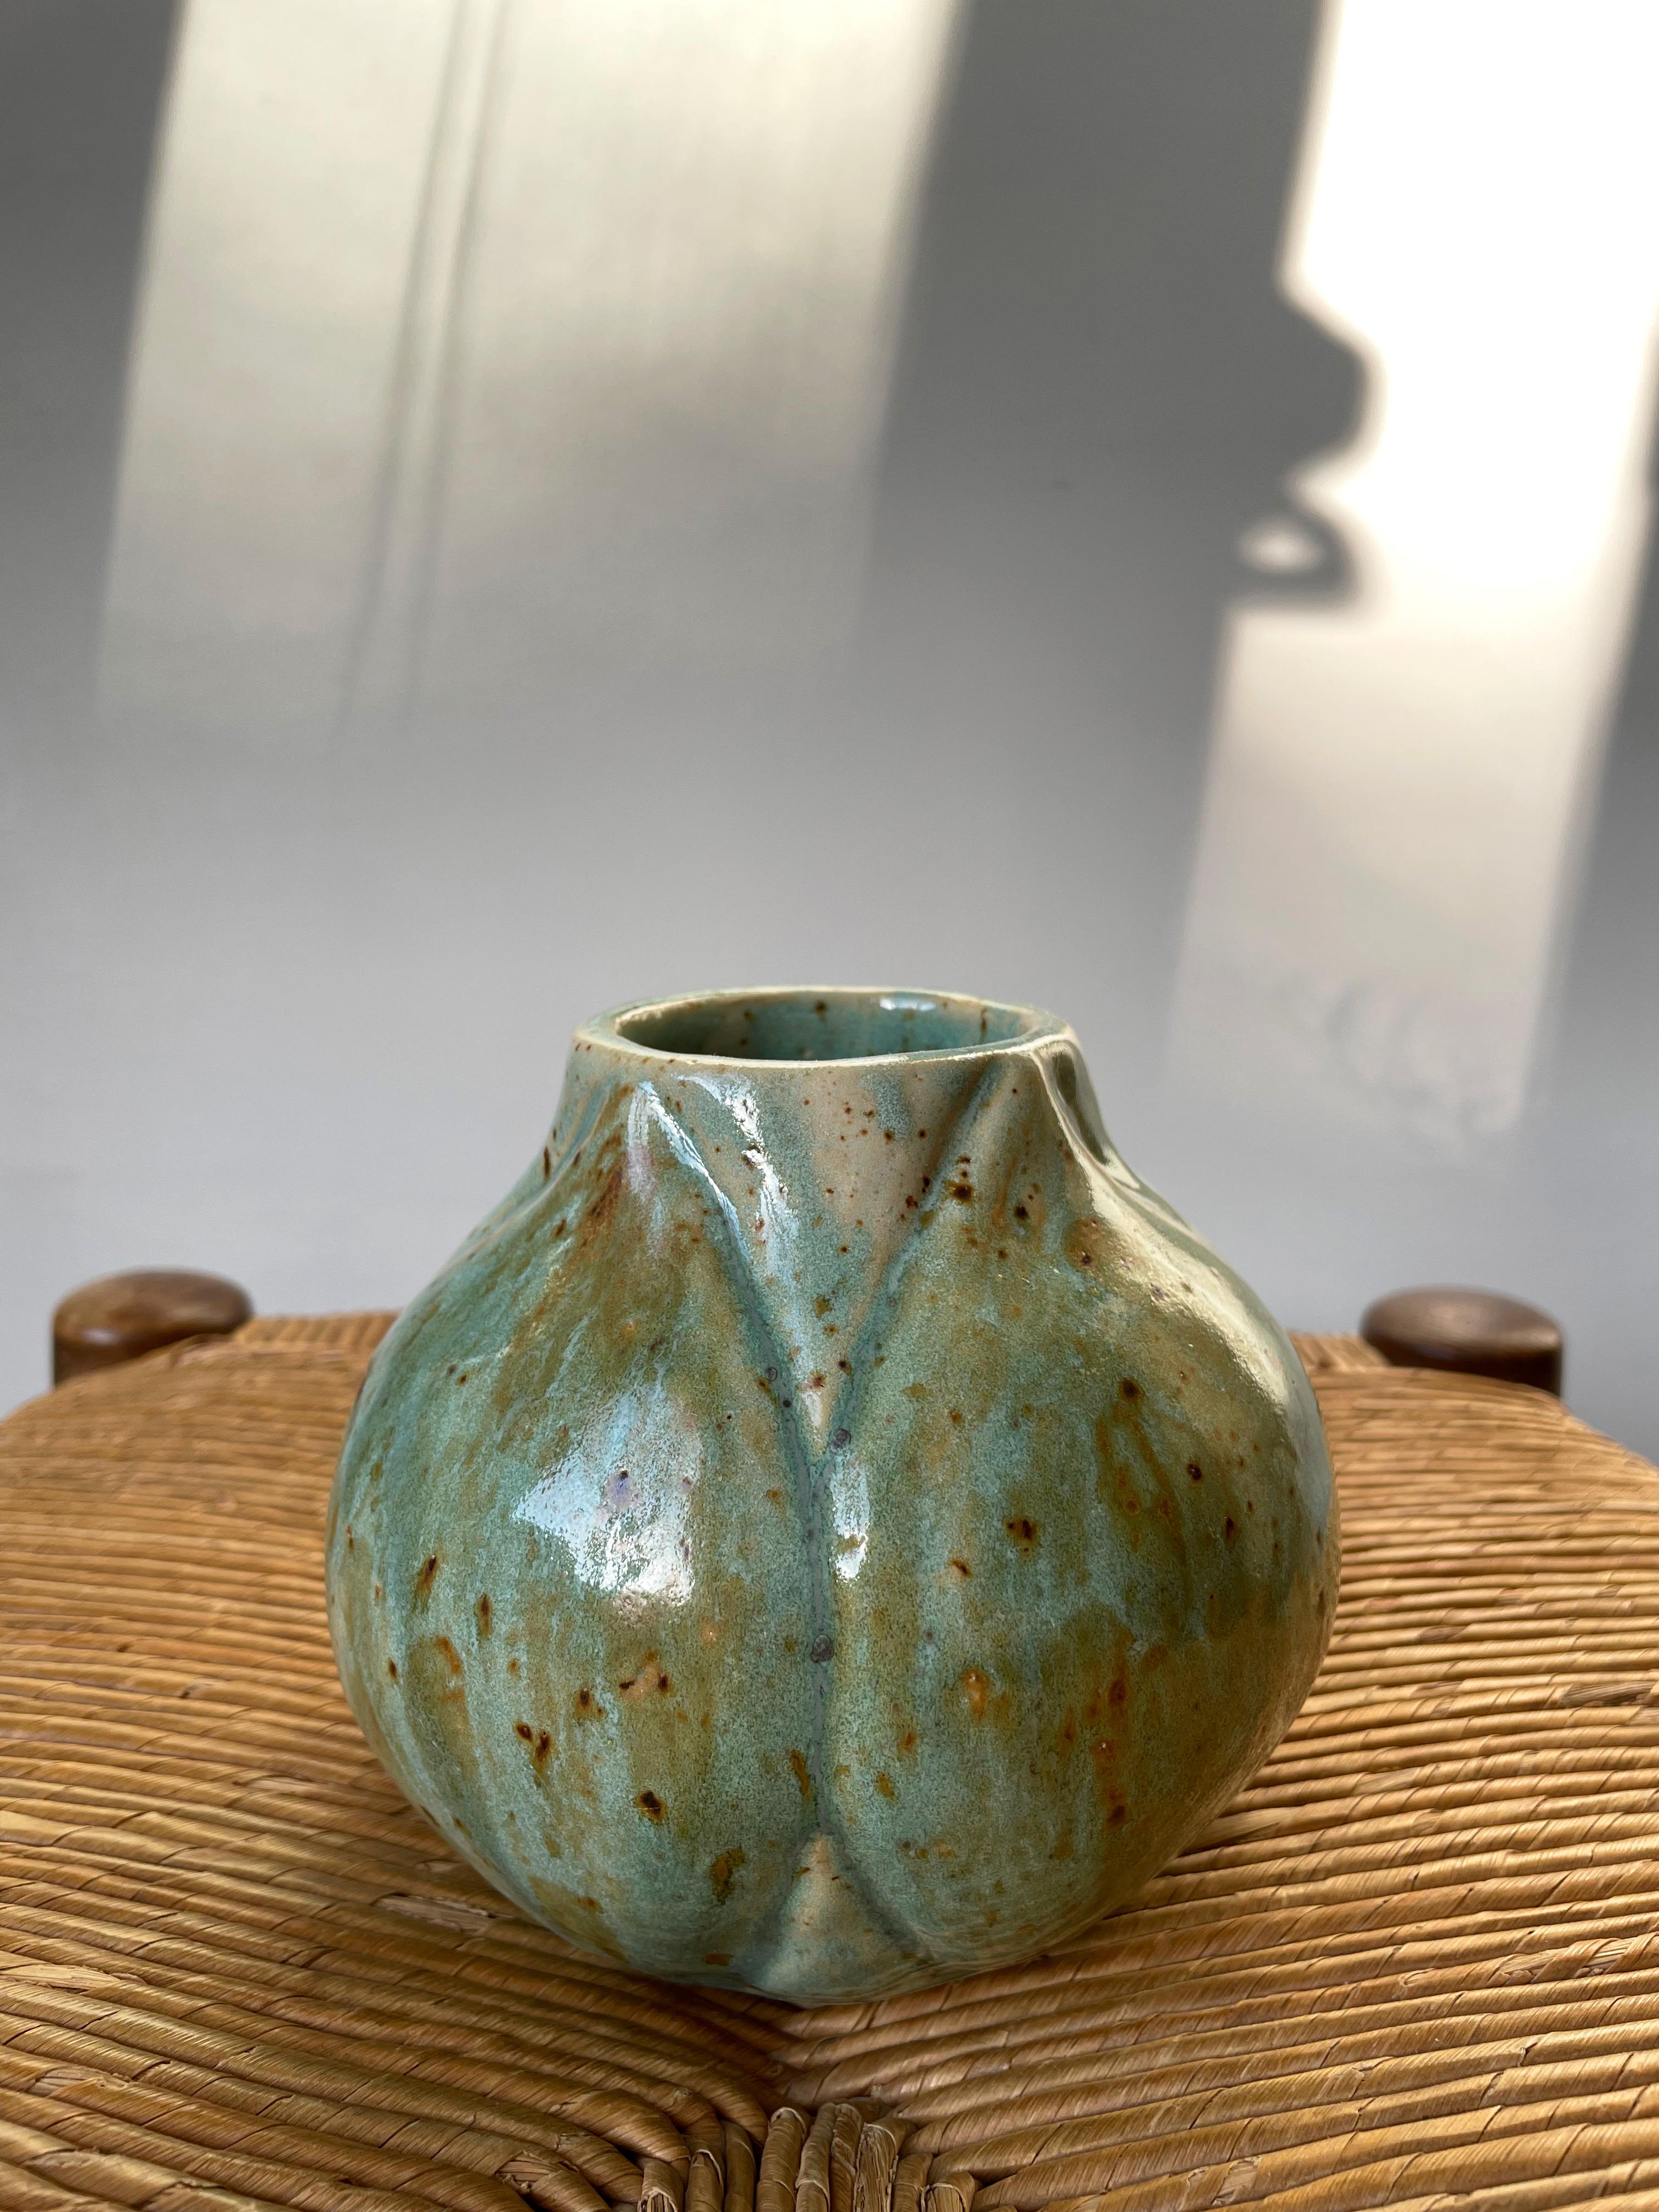 Handmade Danish organic modern ceramic stoneware plump artichoke shaped vase. Green, caramel brown speckled glaze. Signed under base. Beautiful vintage condition.
Denmark, 1990. 